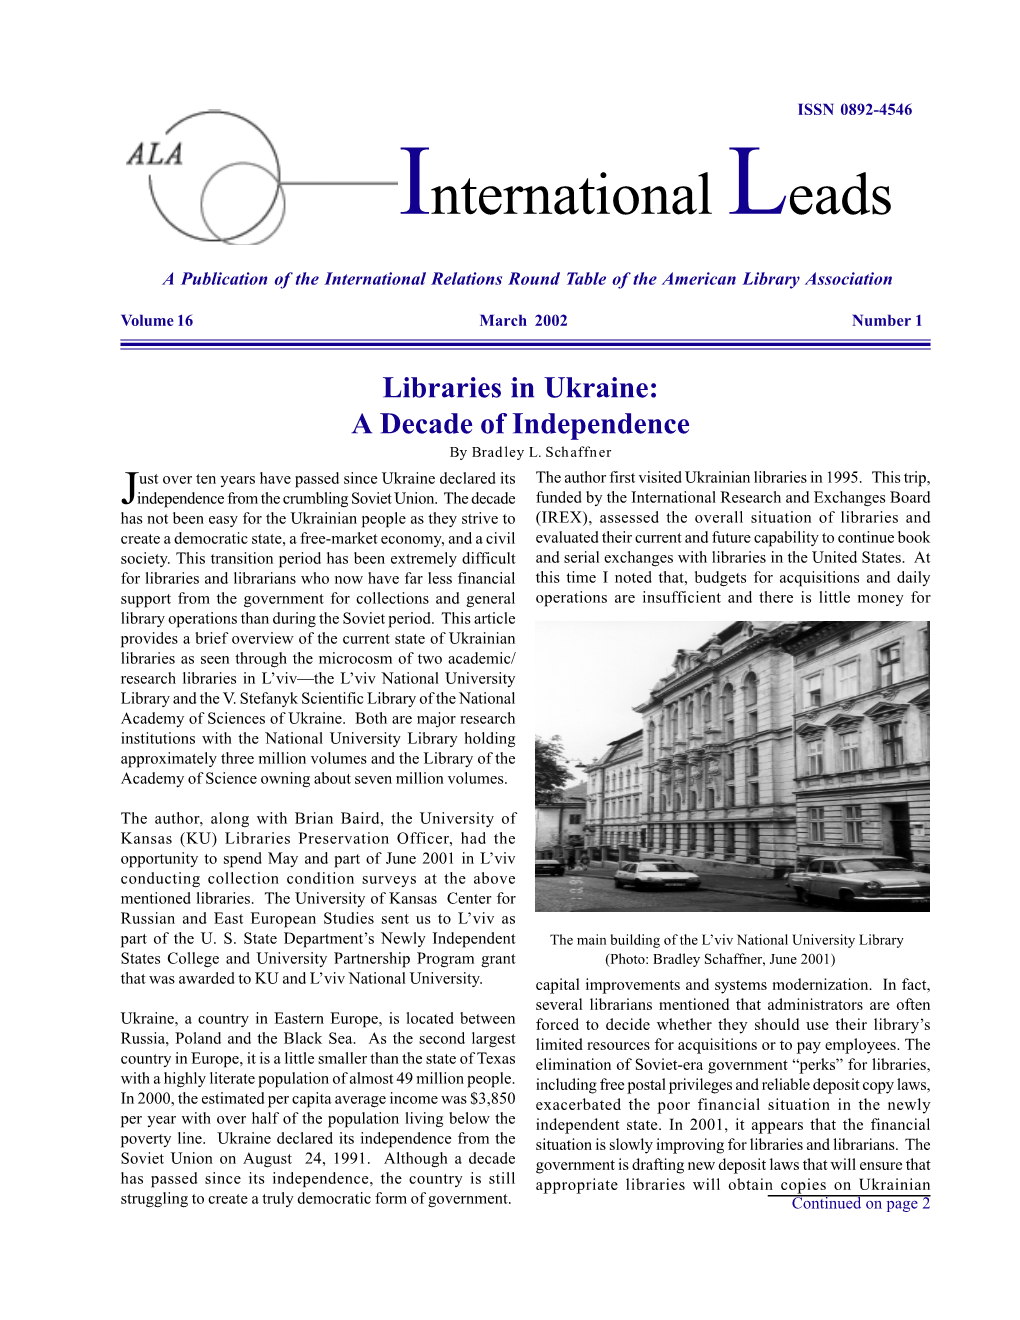 International Leads